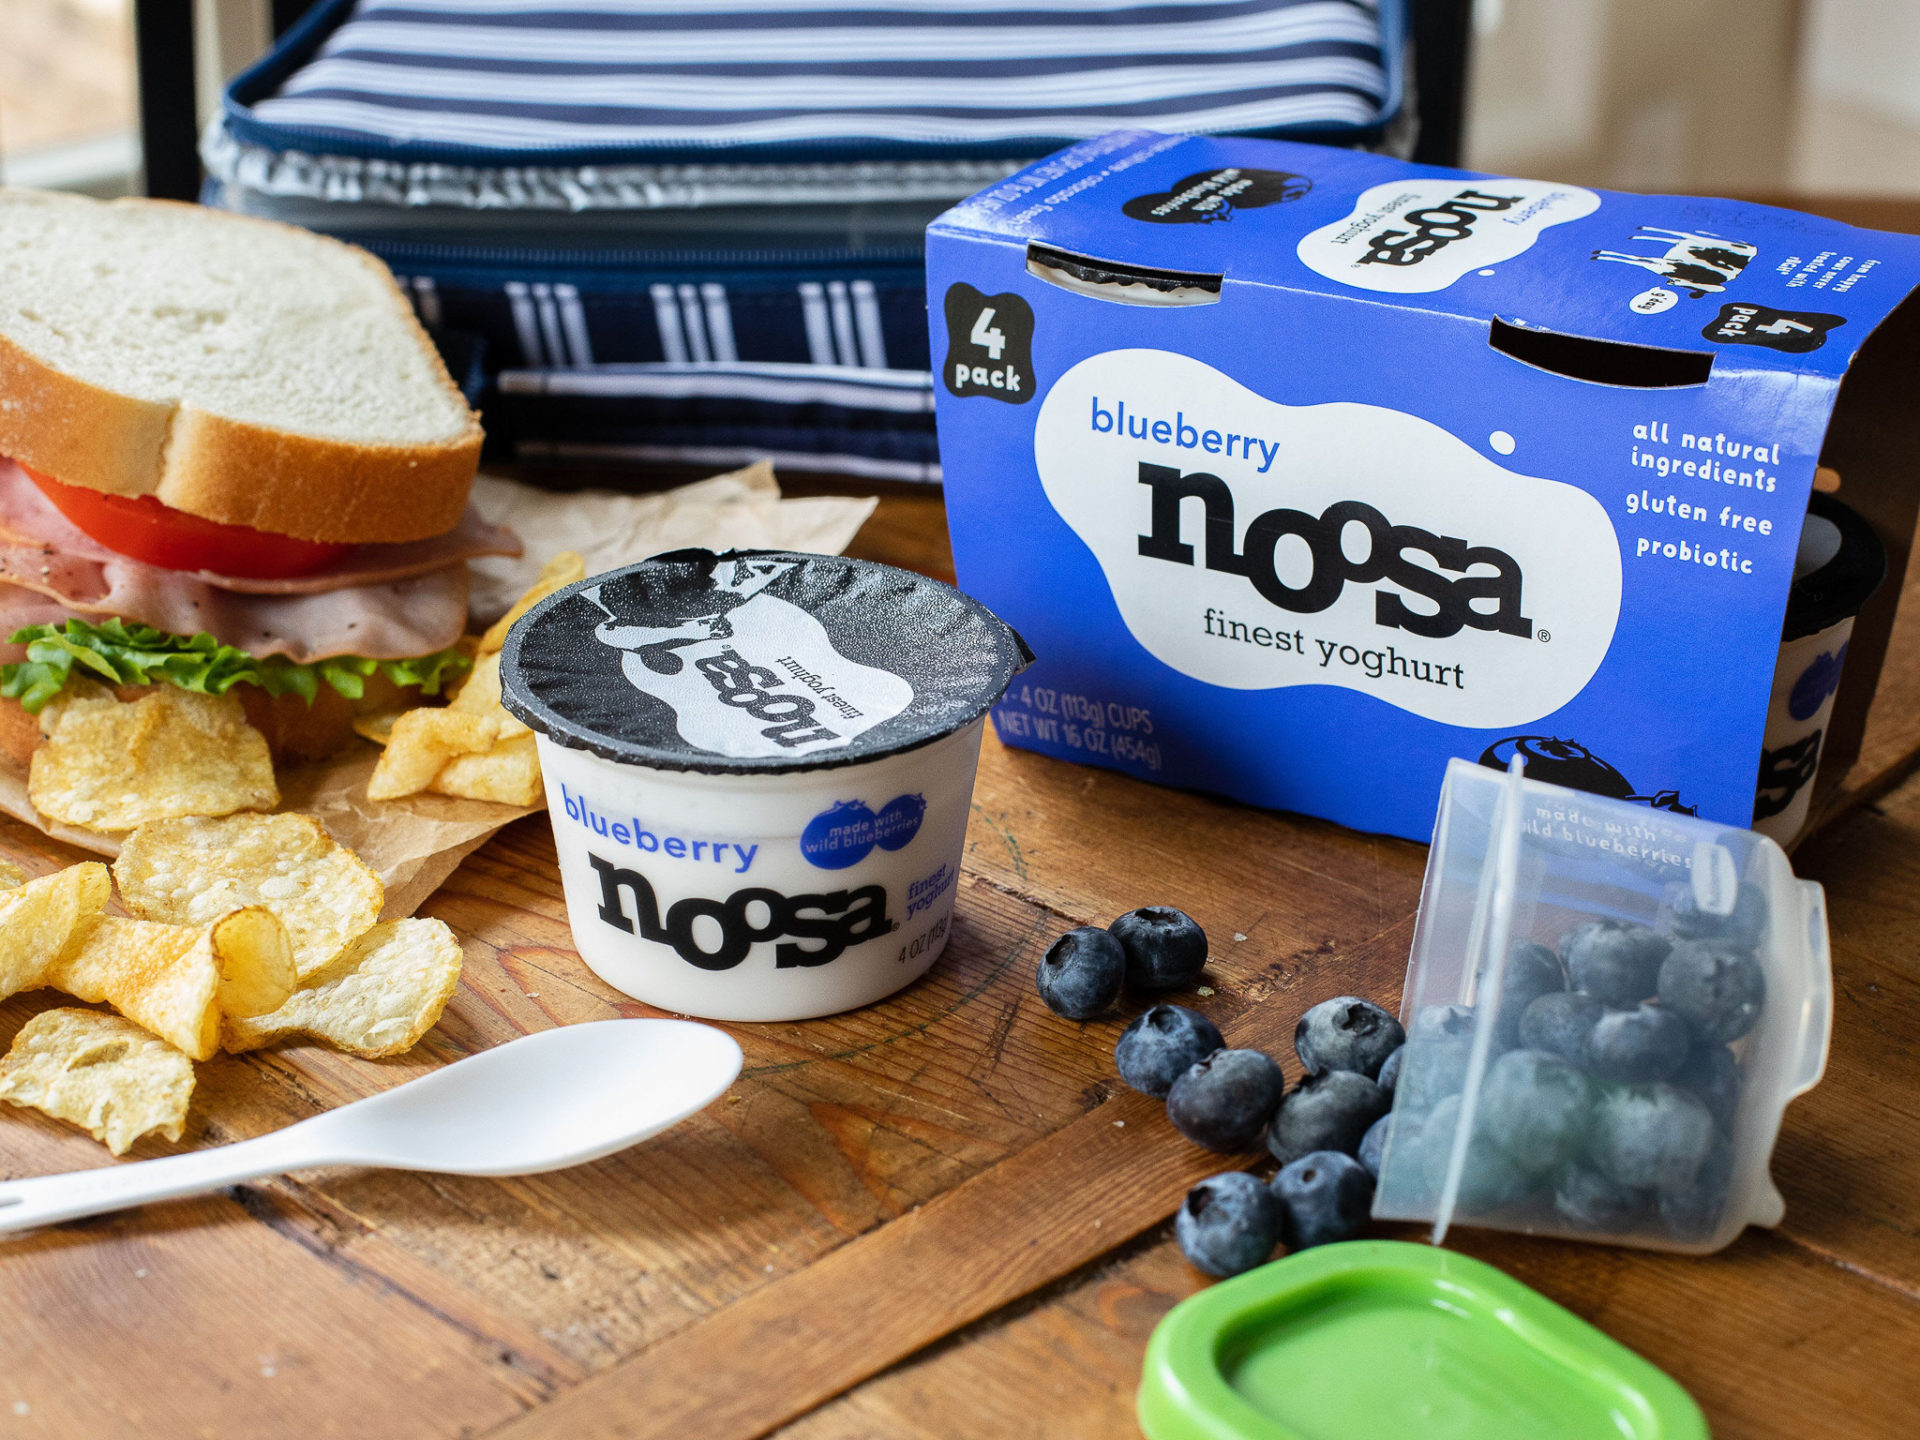 4-Pack Of Noosa Finest Yogurt Just $3.49 At Kroger – Just 87¢ Per Cup